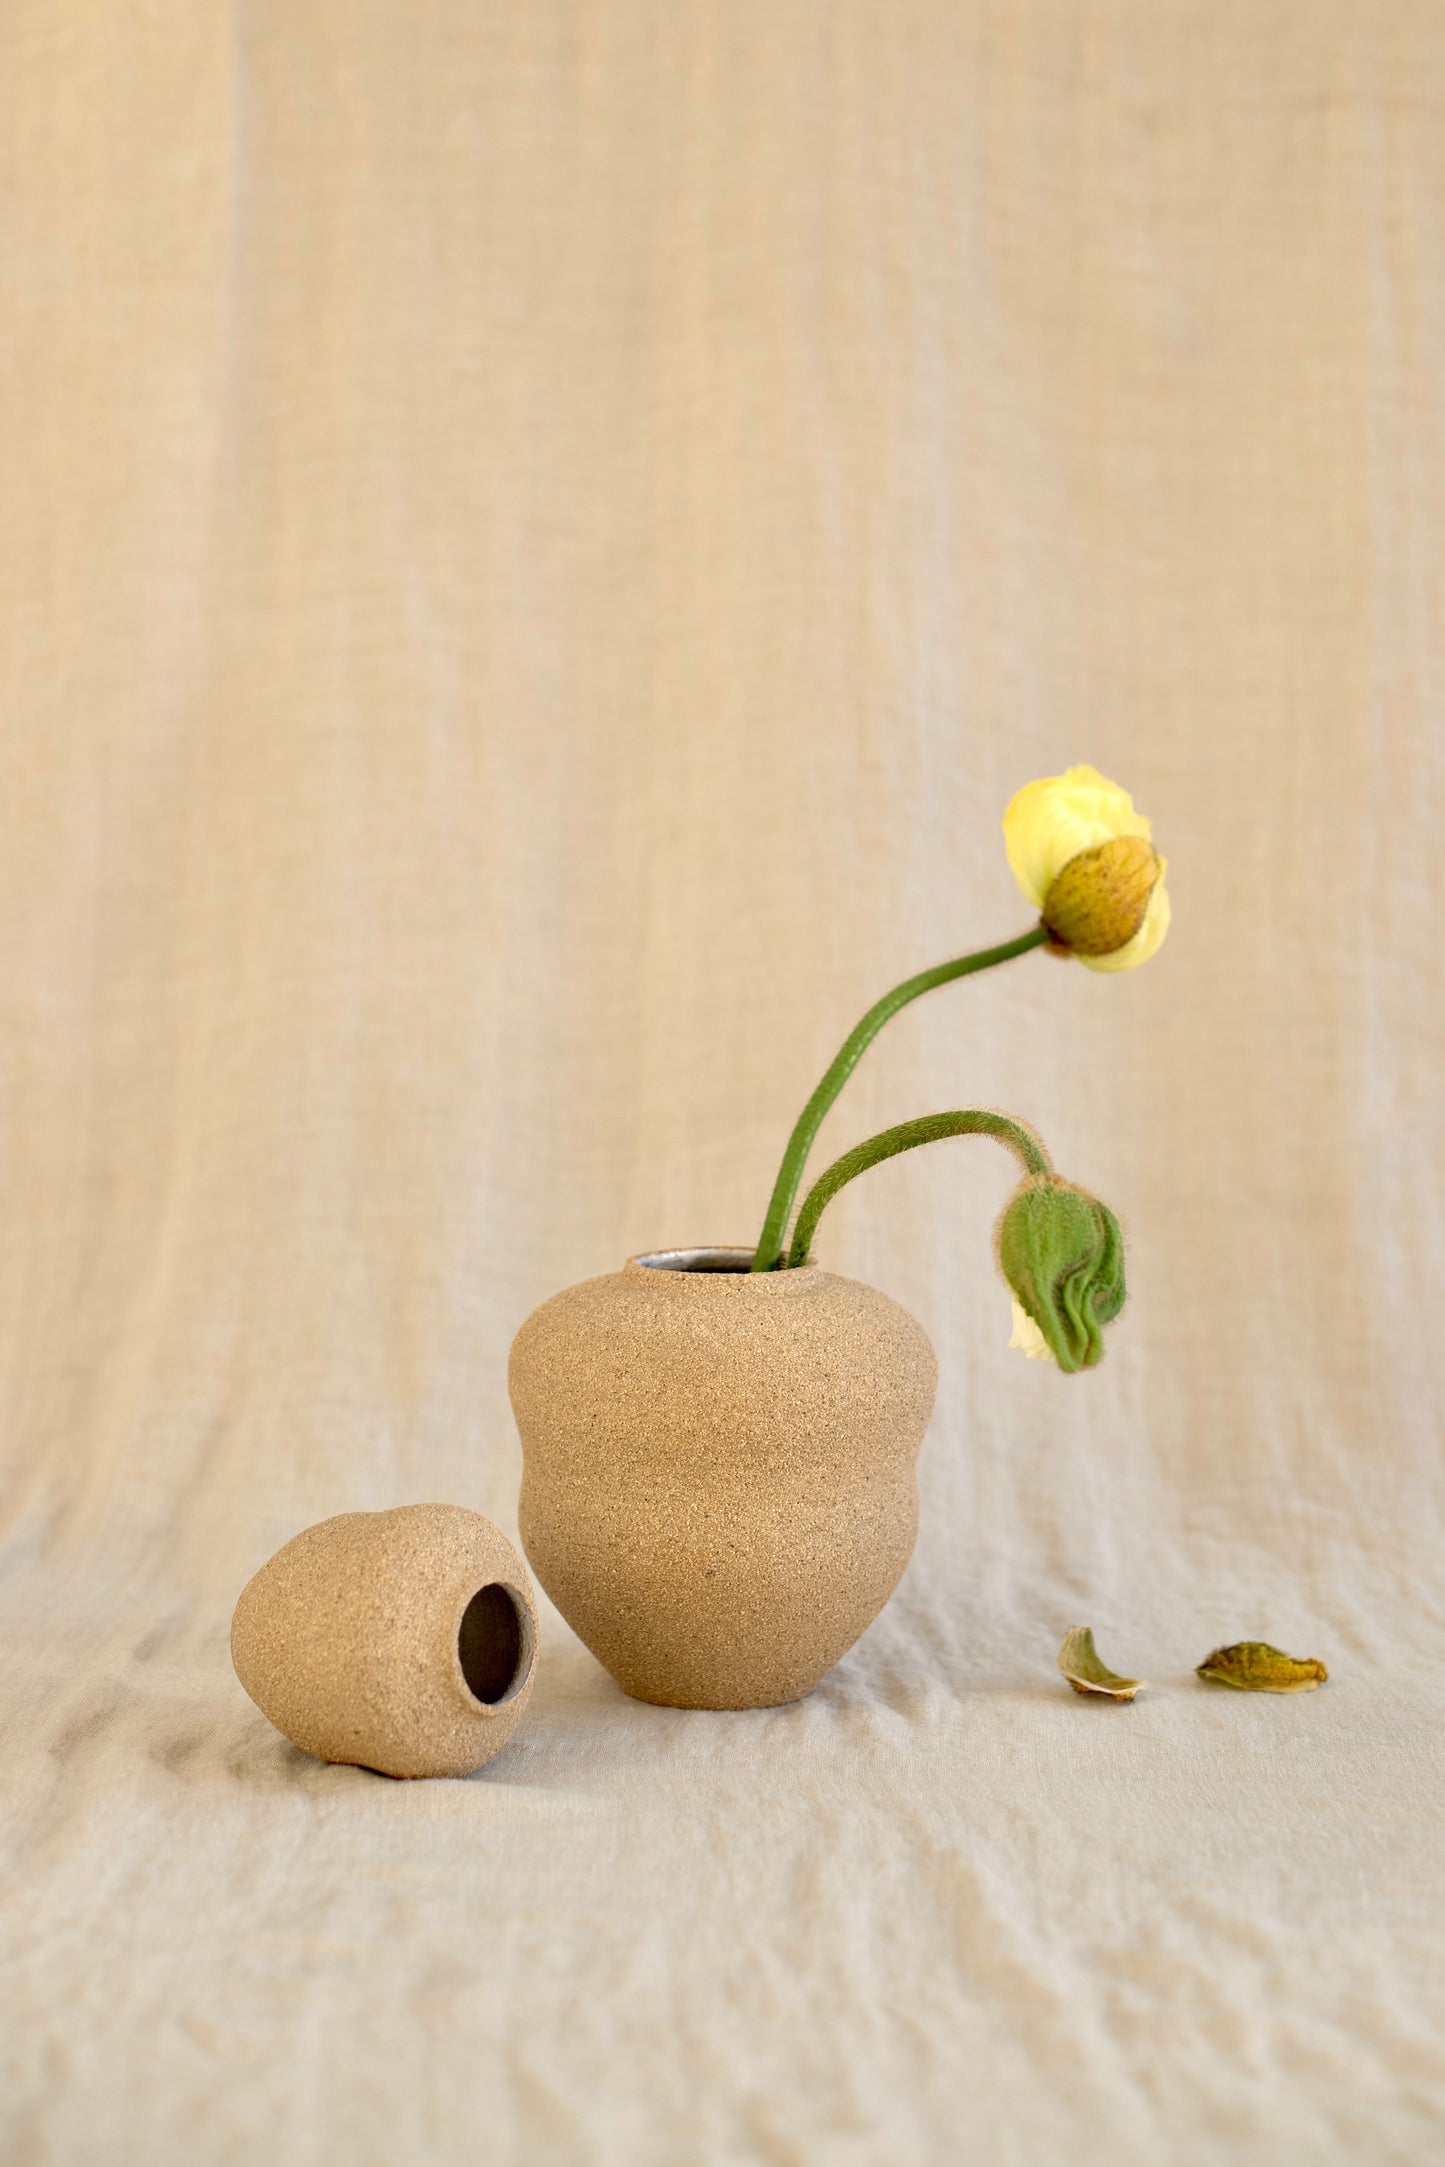 Wide curvy vase large - Brown sugar / white